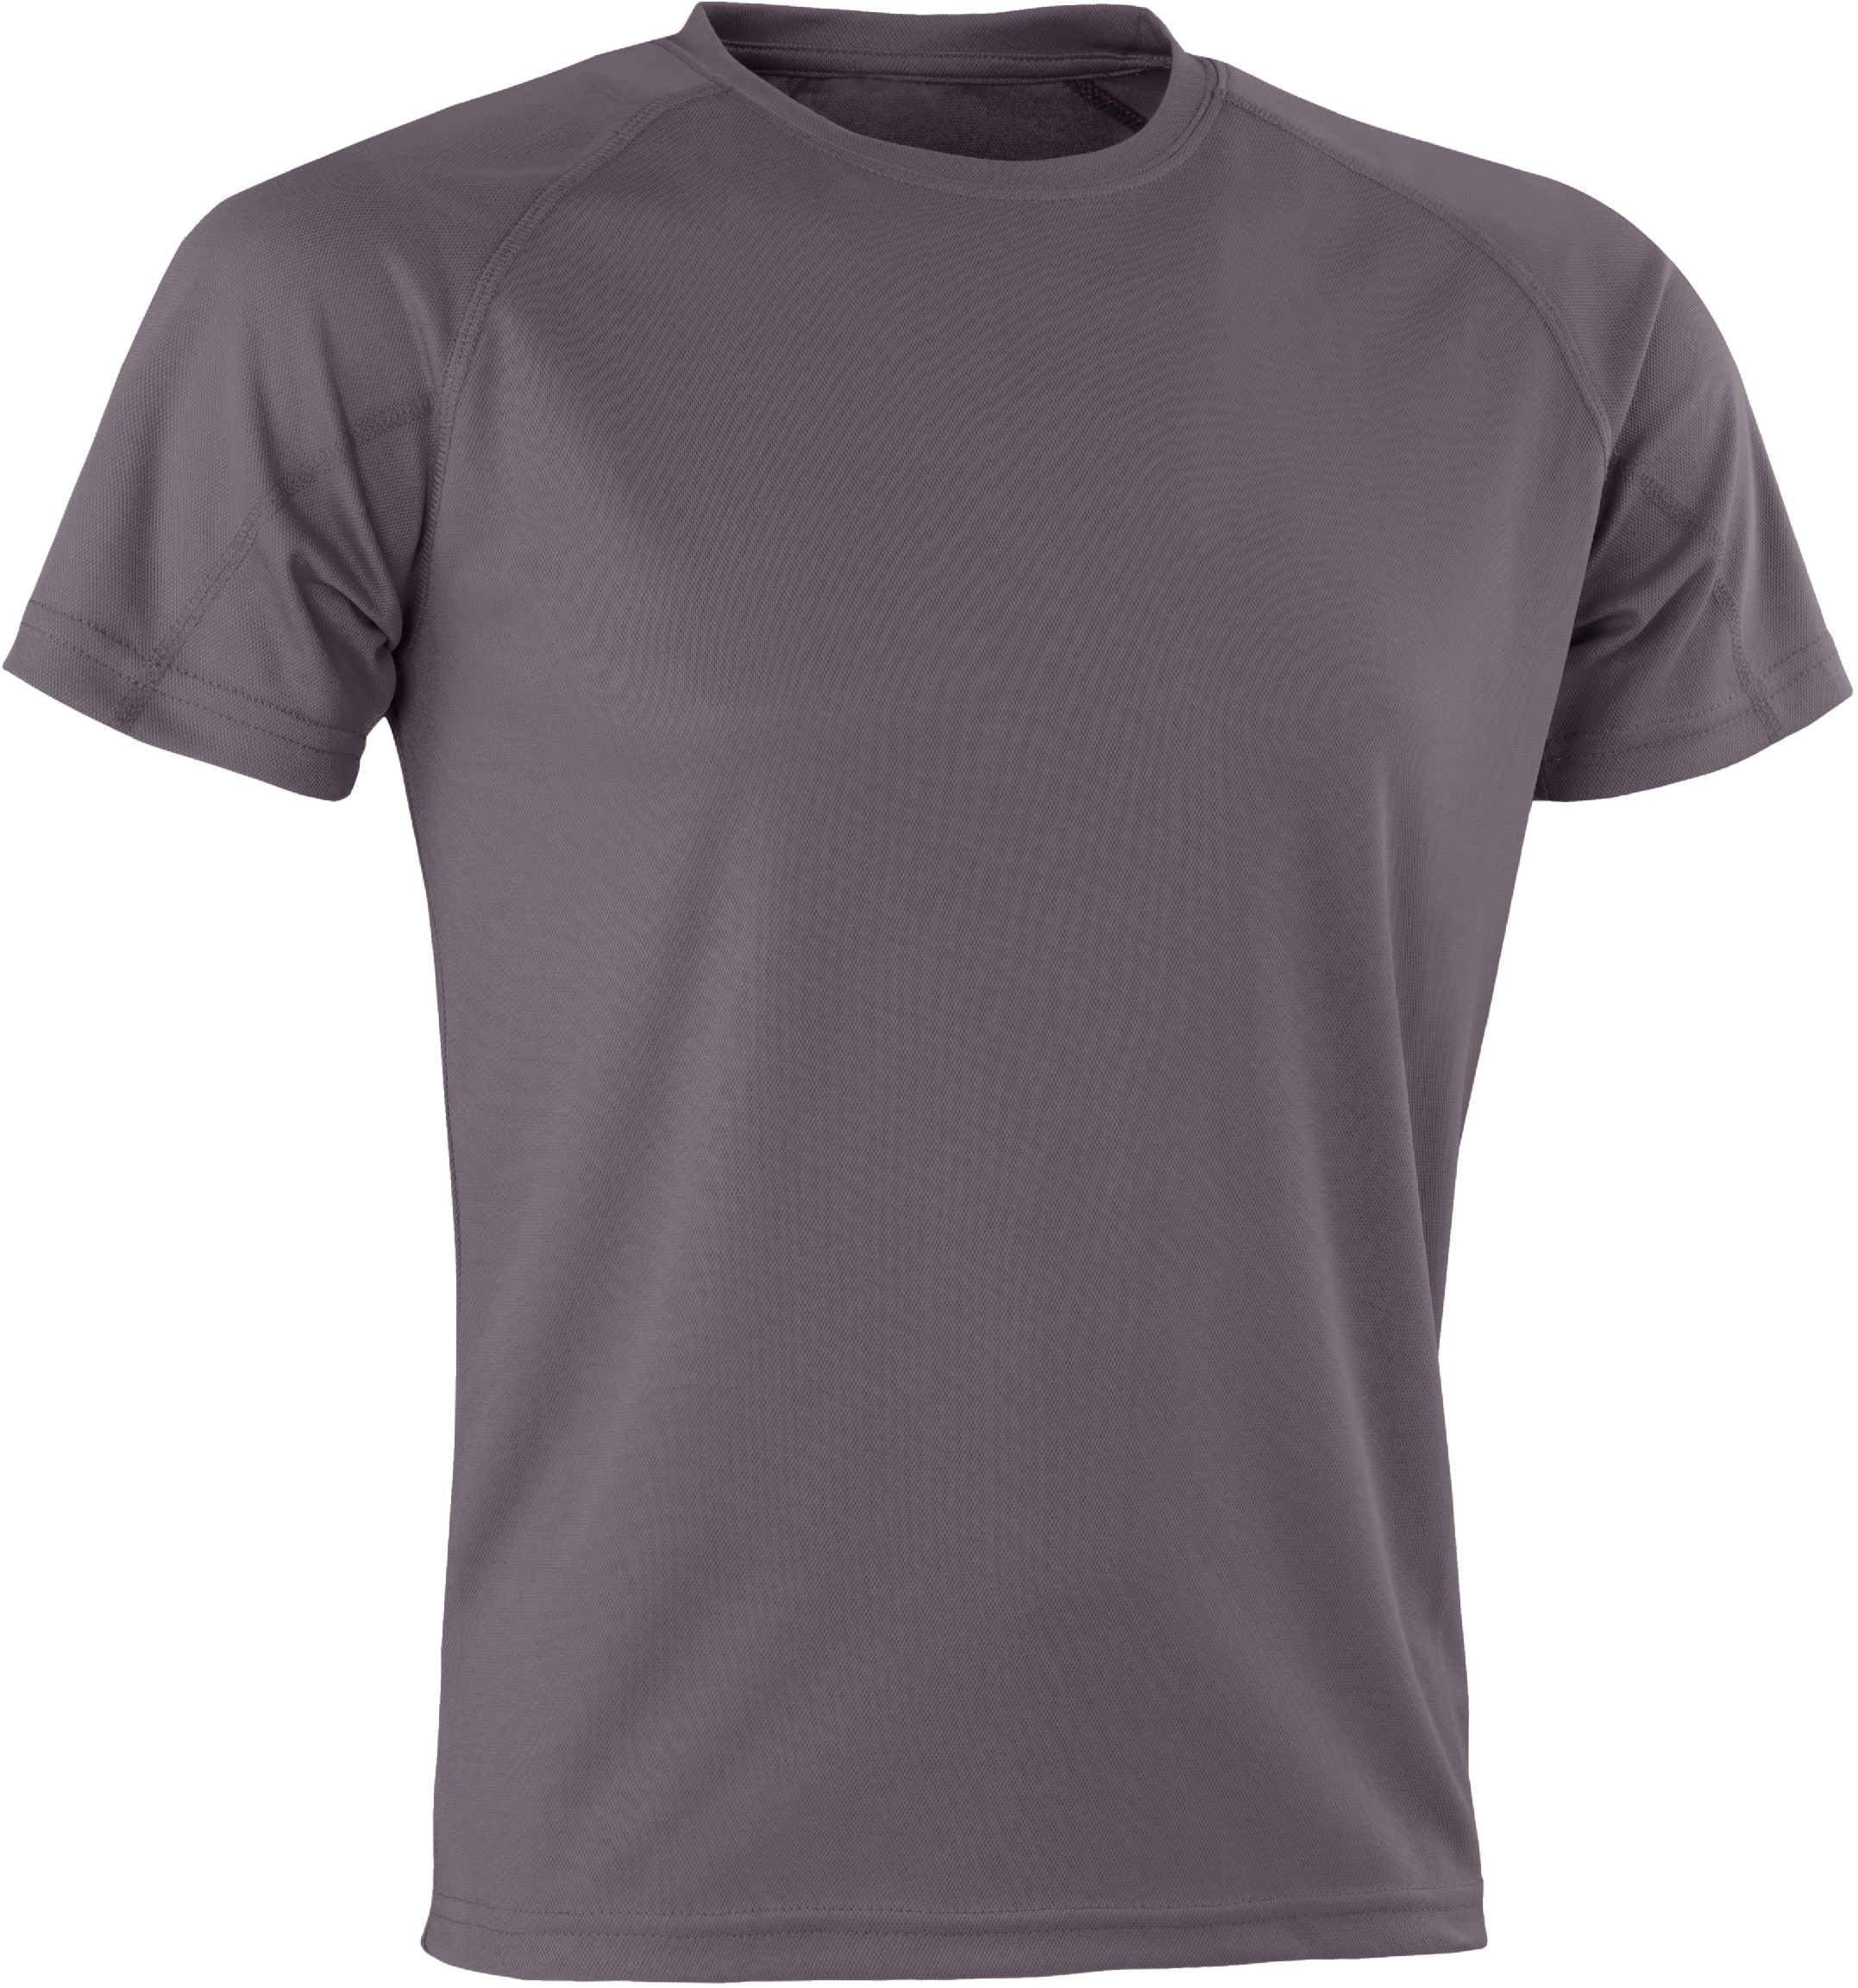 Sportovní tričko Aircool S287X Barva: šedá, Velikost: 3XL